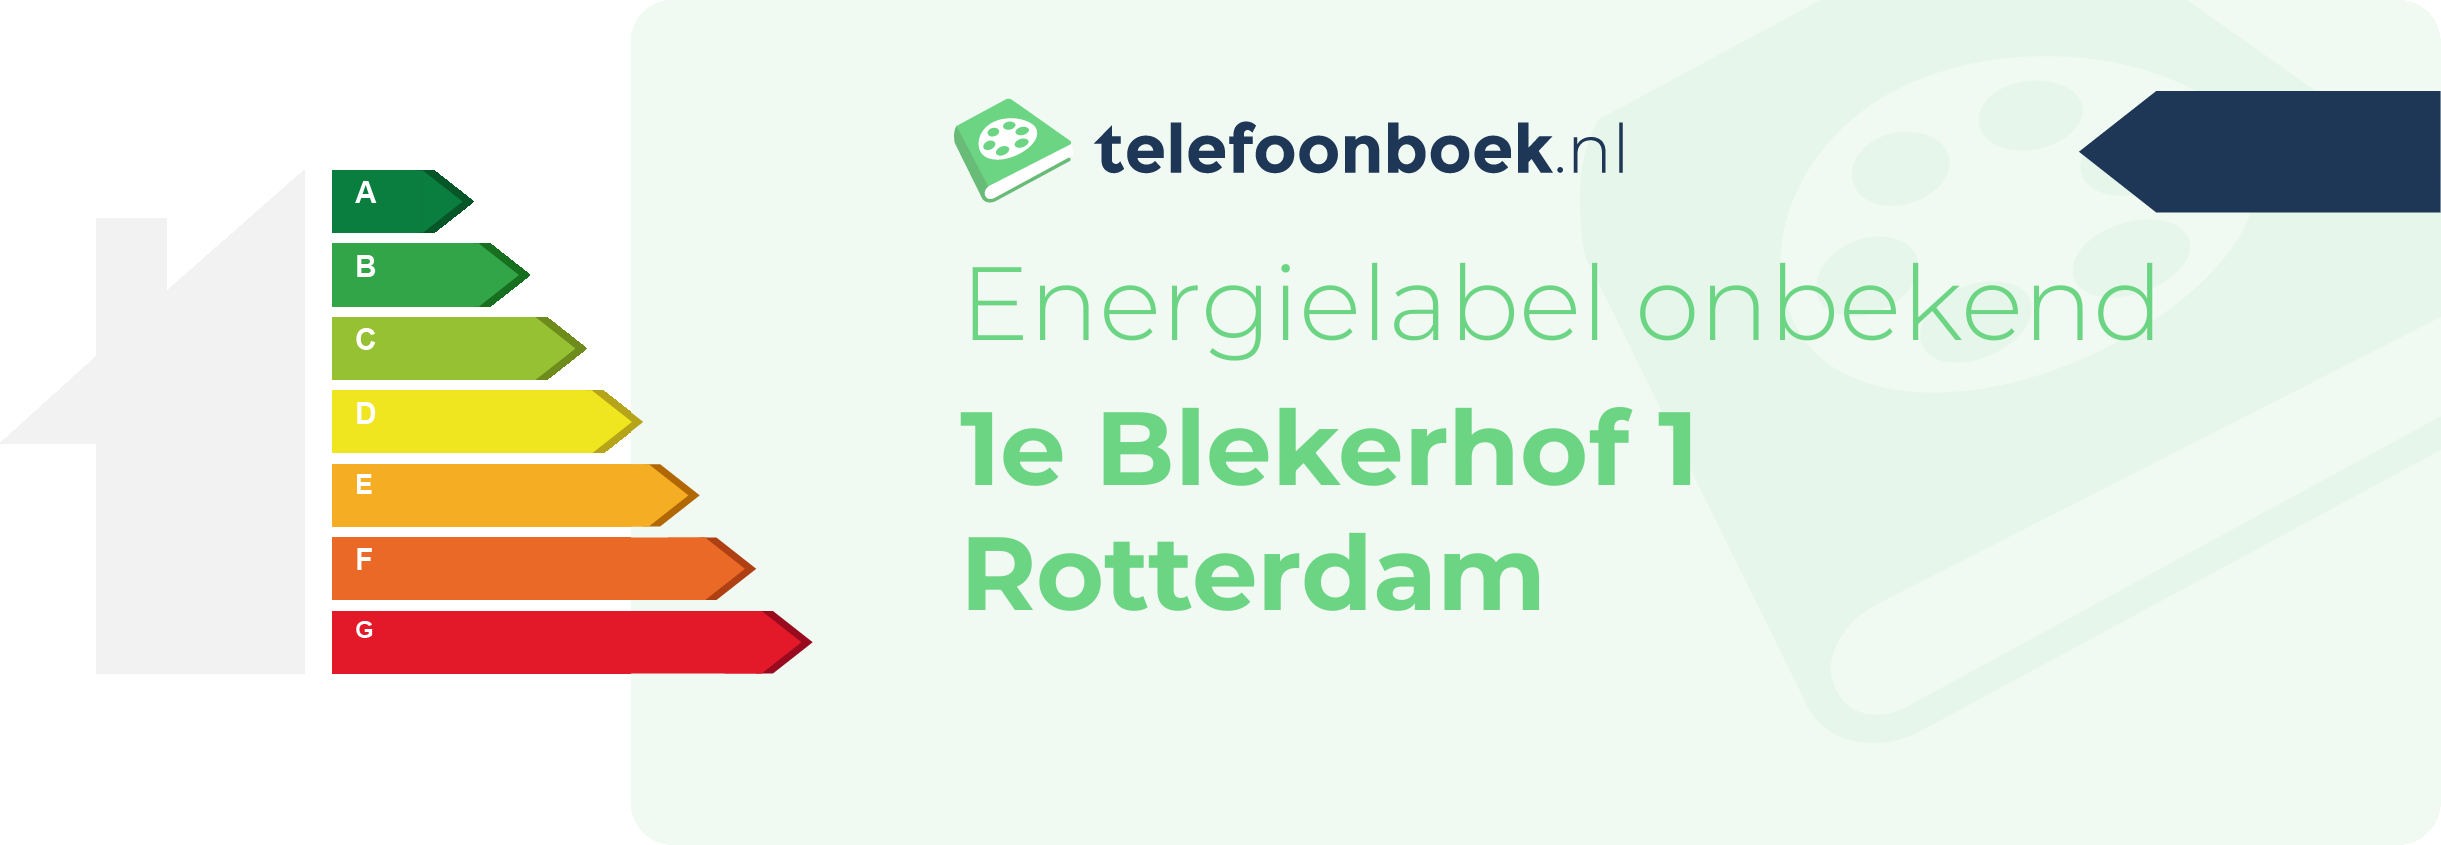 Energielabel 1e Blekerhof 1 Rotterdam